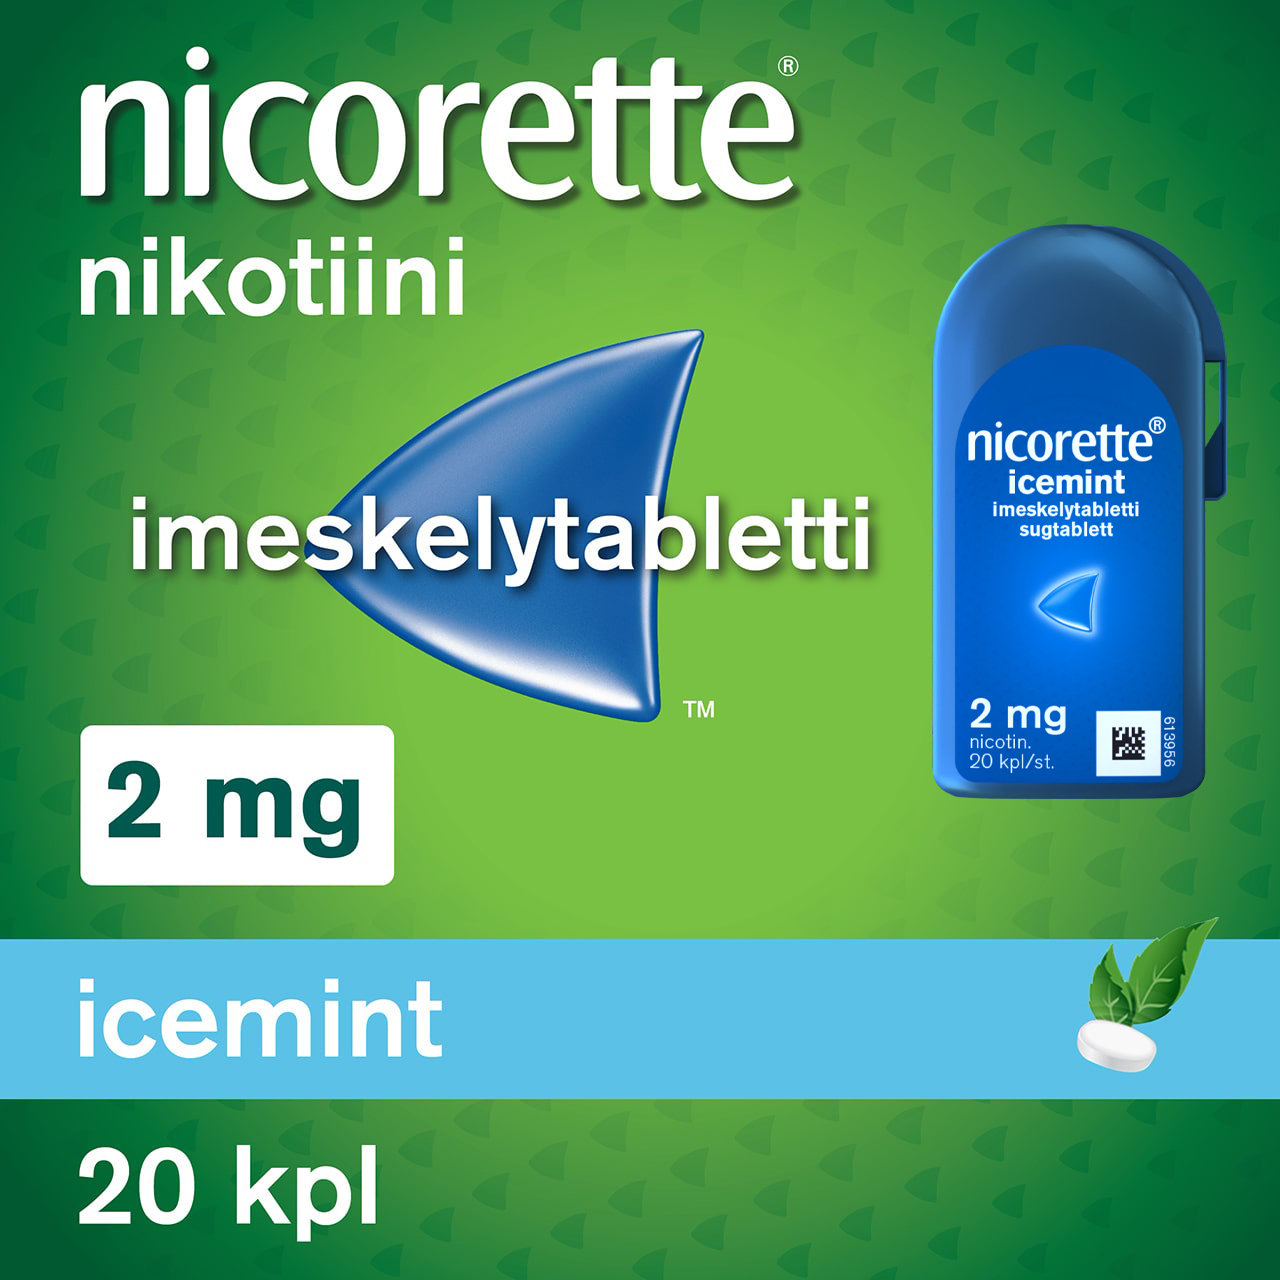 nicorette-nikotiini-imeskelytabletti-icemint-2mg-20-kpl-tupakoinnin-lopettamiseen